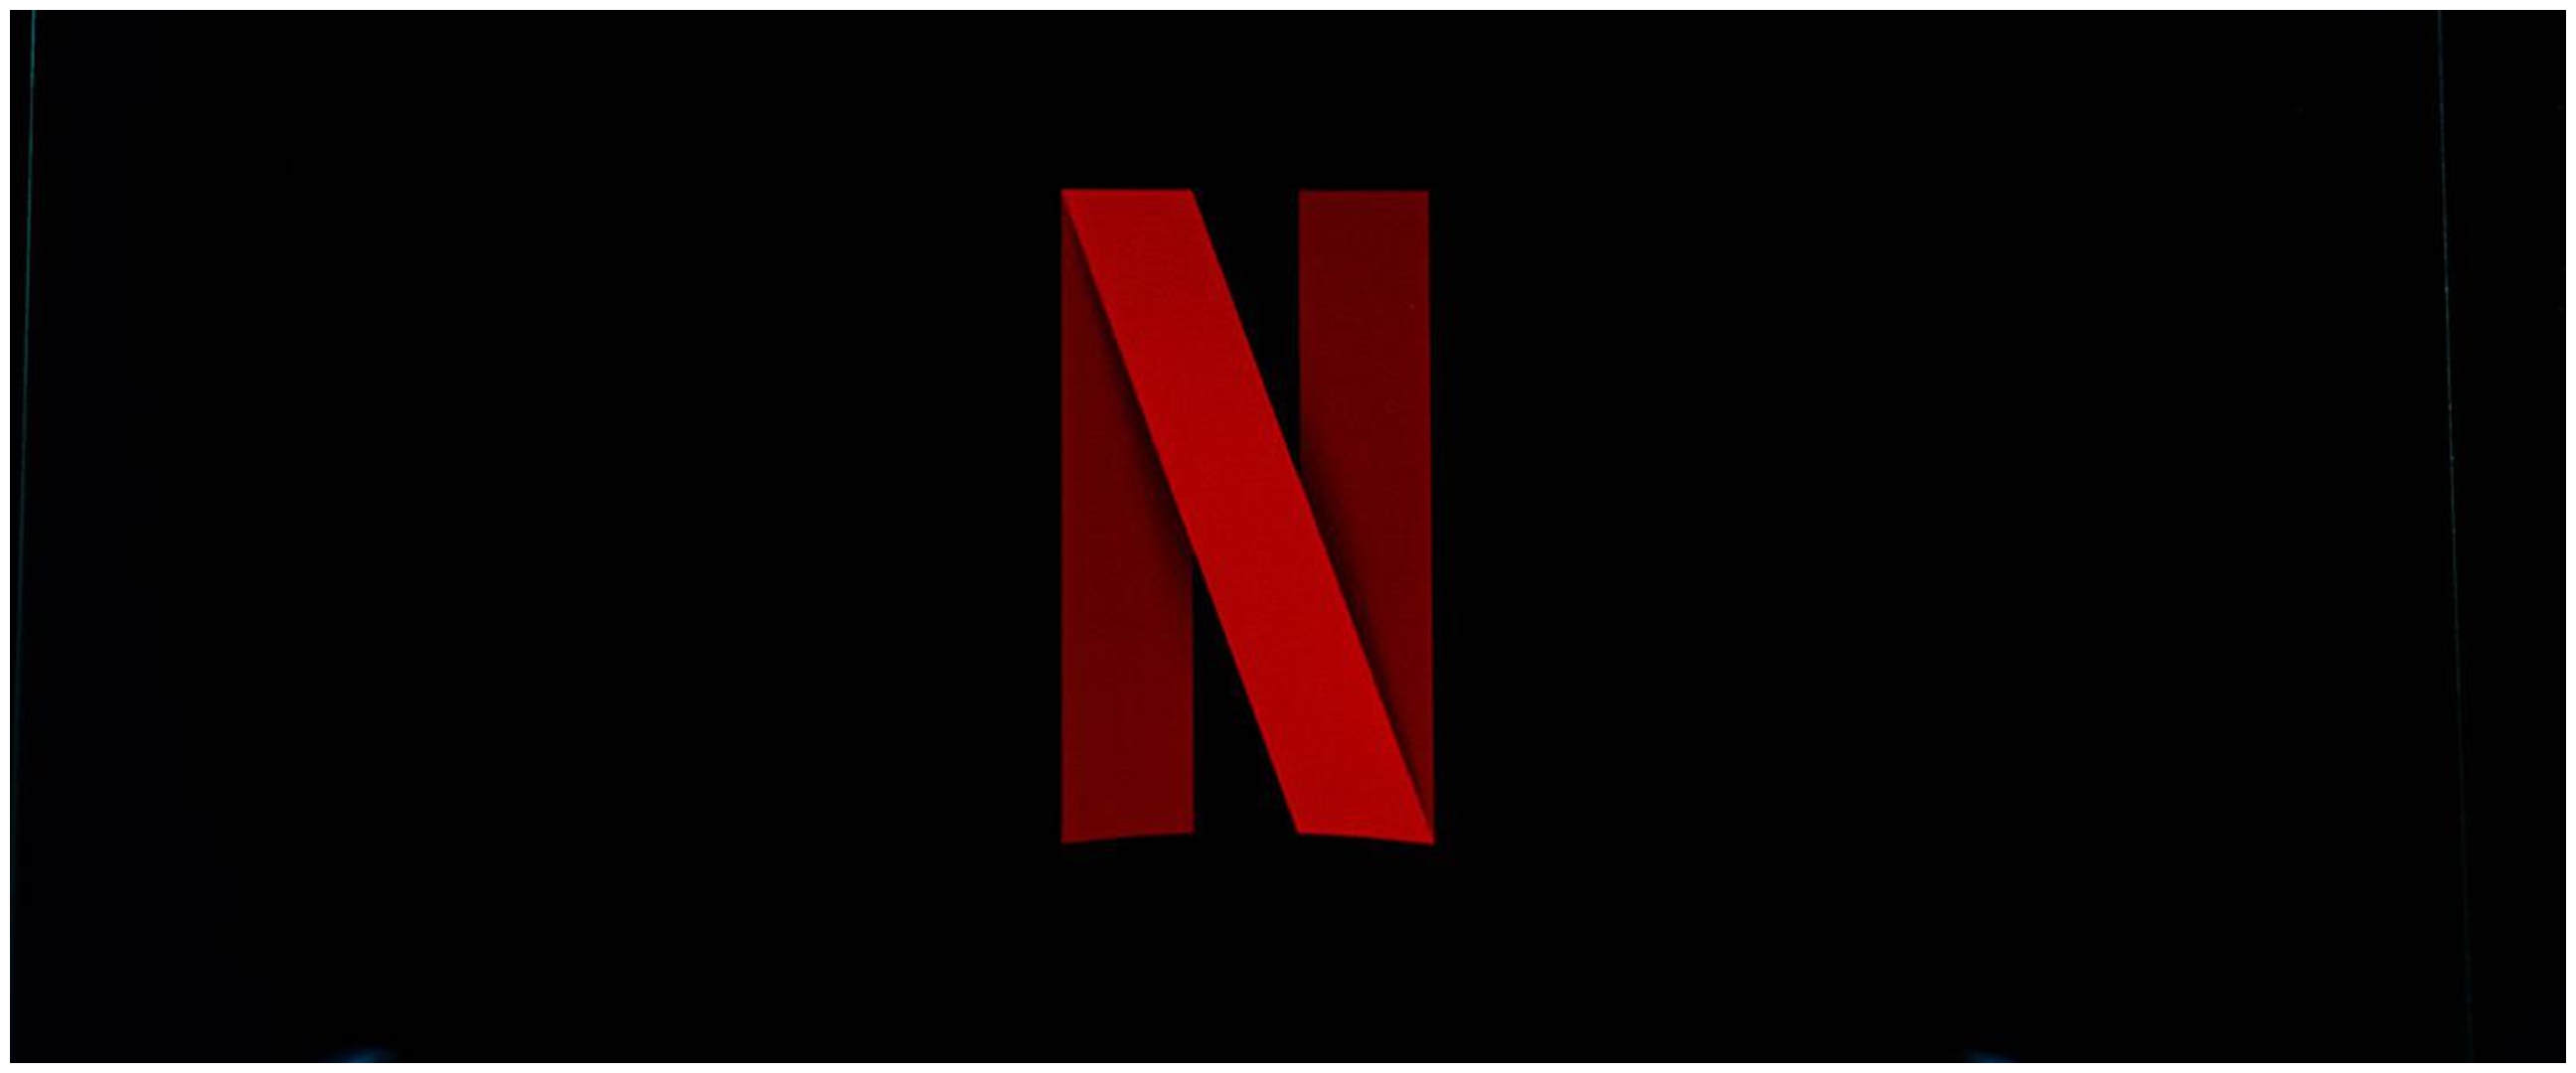 Kisah di balik bunyi 'tudum' Netflix, suara kambing nyaris dipilih